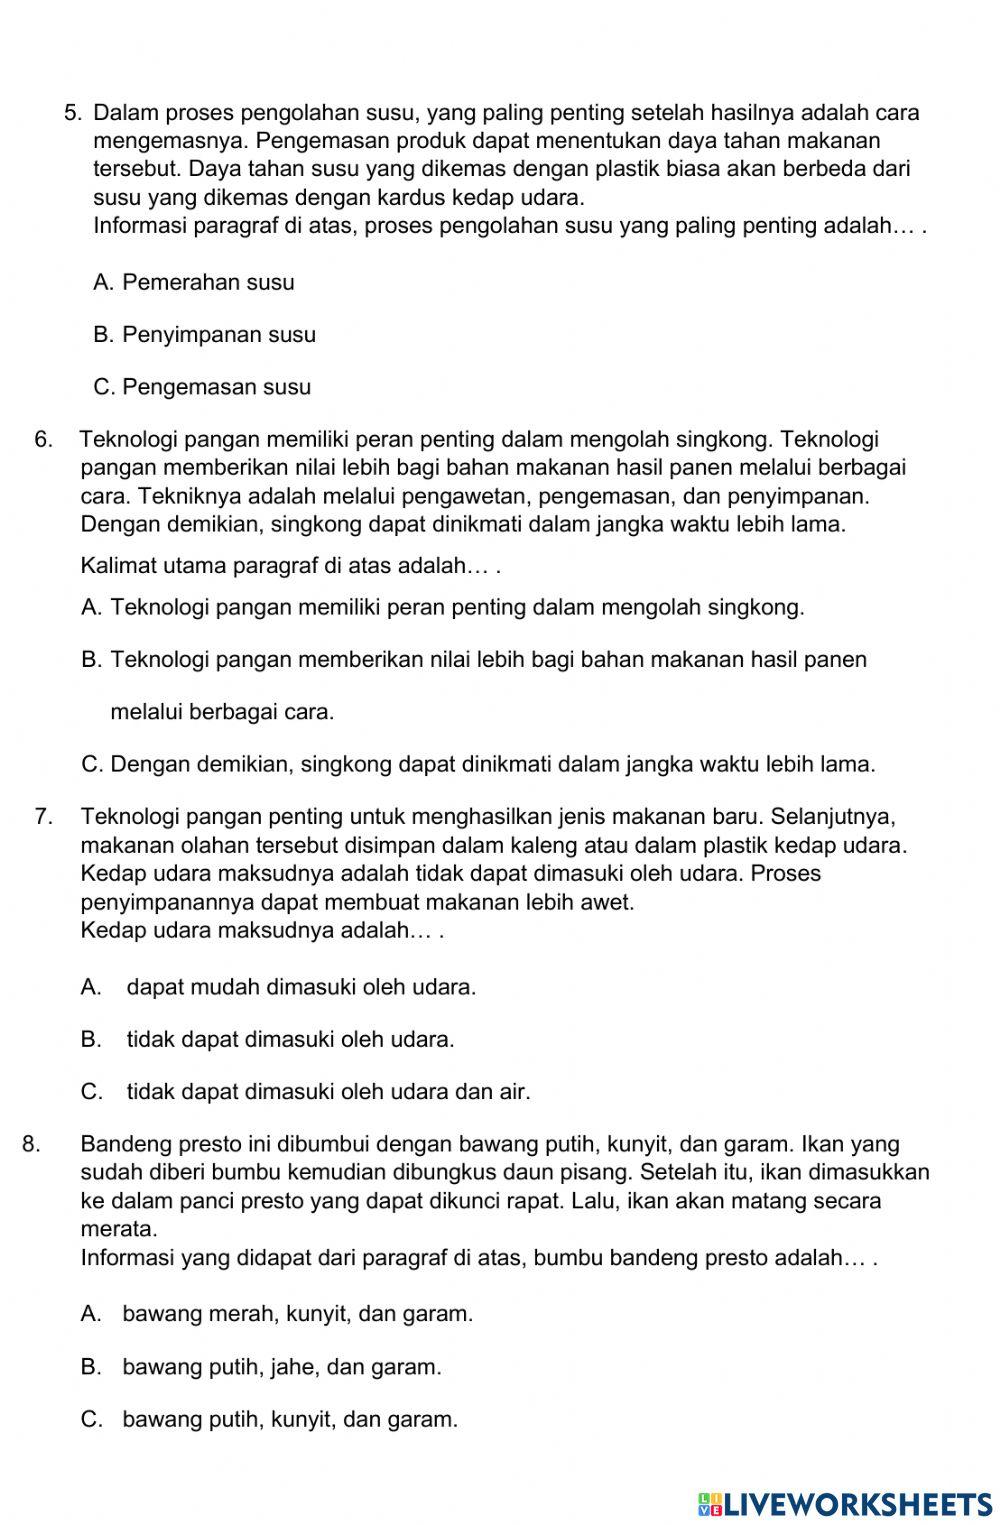 Latihan bahasa indonesia t7 st1